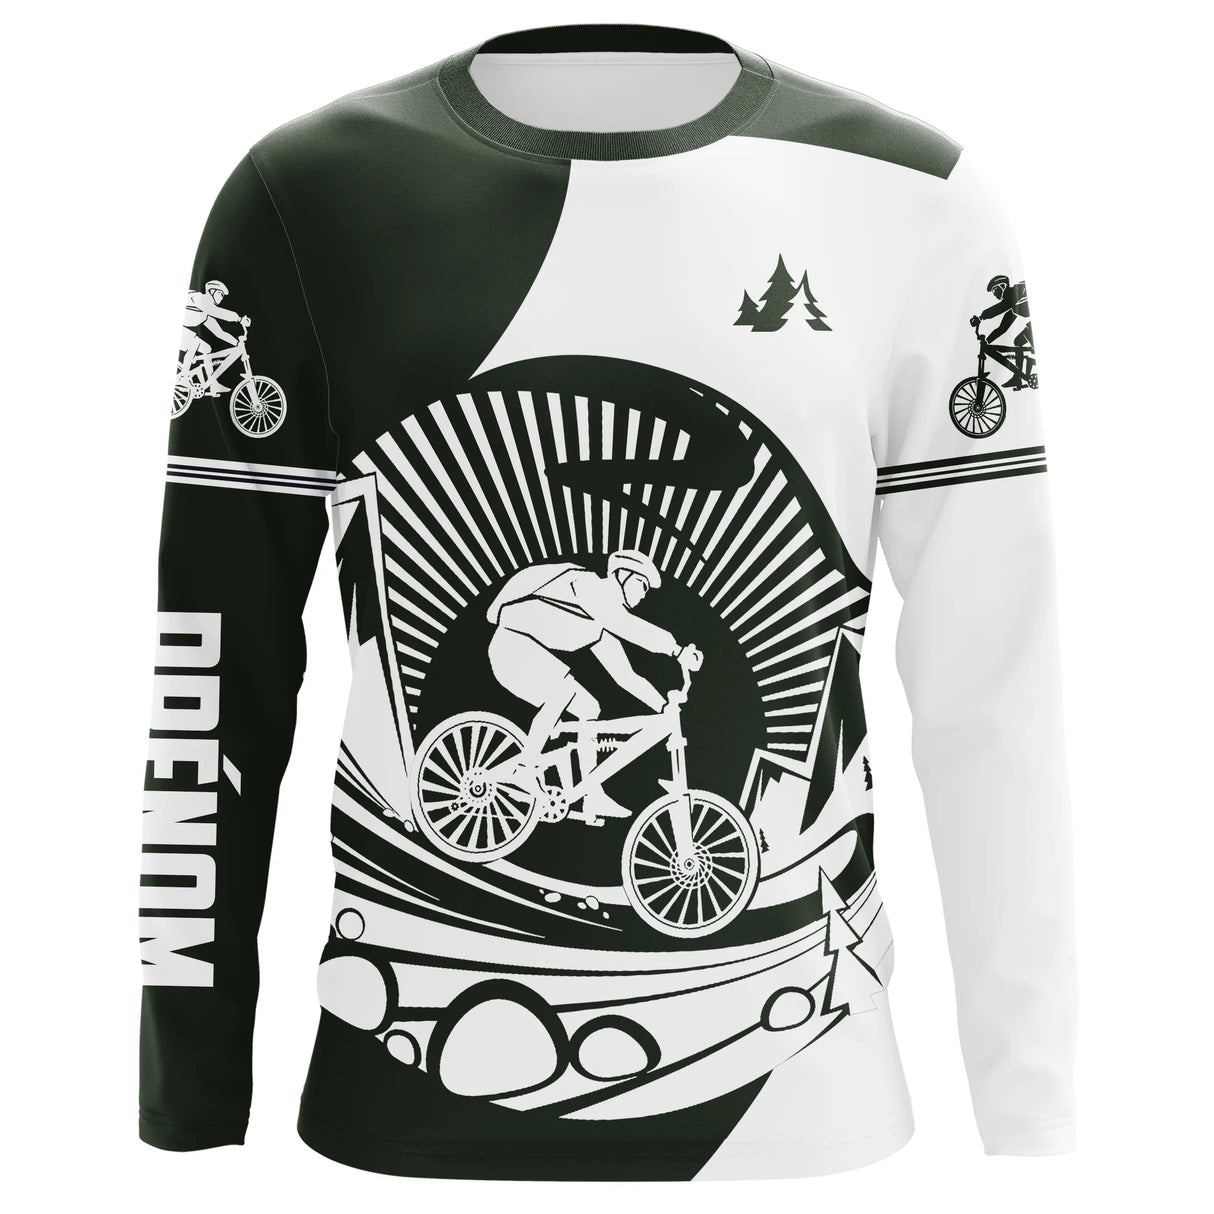 Dynamic MTB Cycling T-Shirt - Comfort, Sporty Style - CT07022433